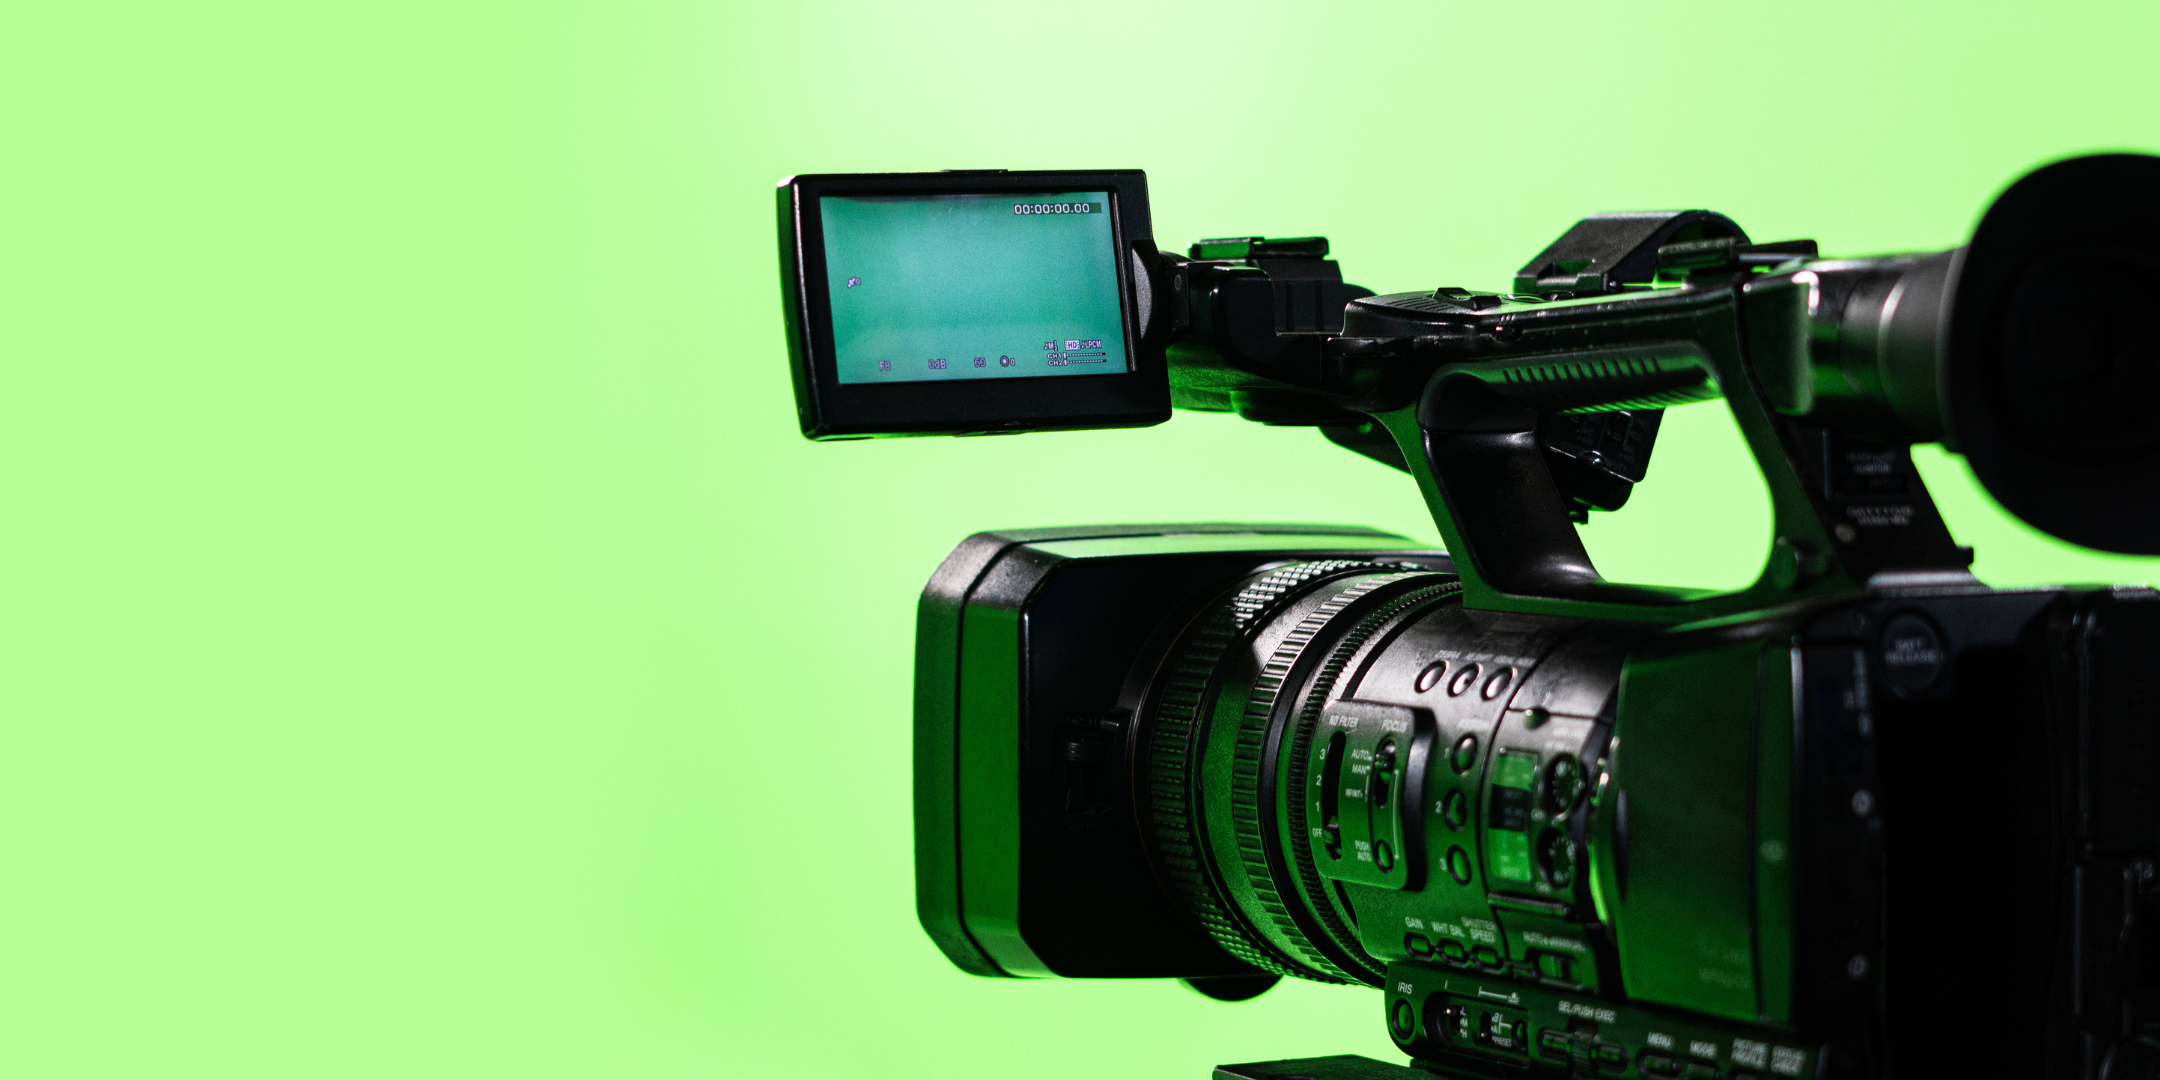 TV camera in professional chroma studio, green screen backdrop